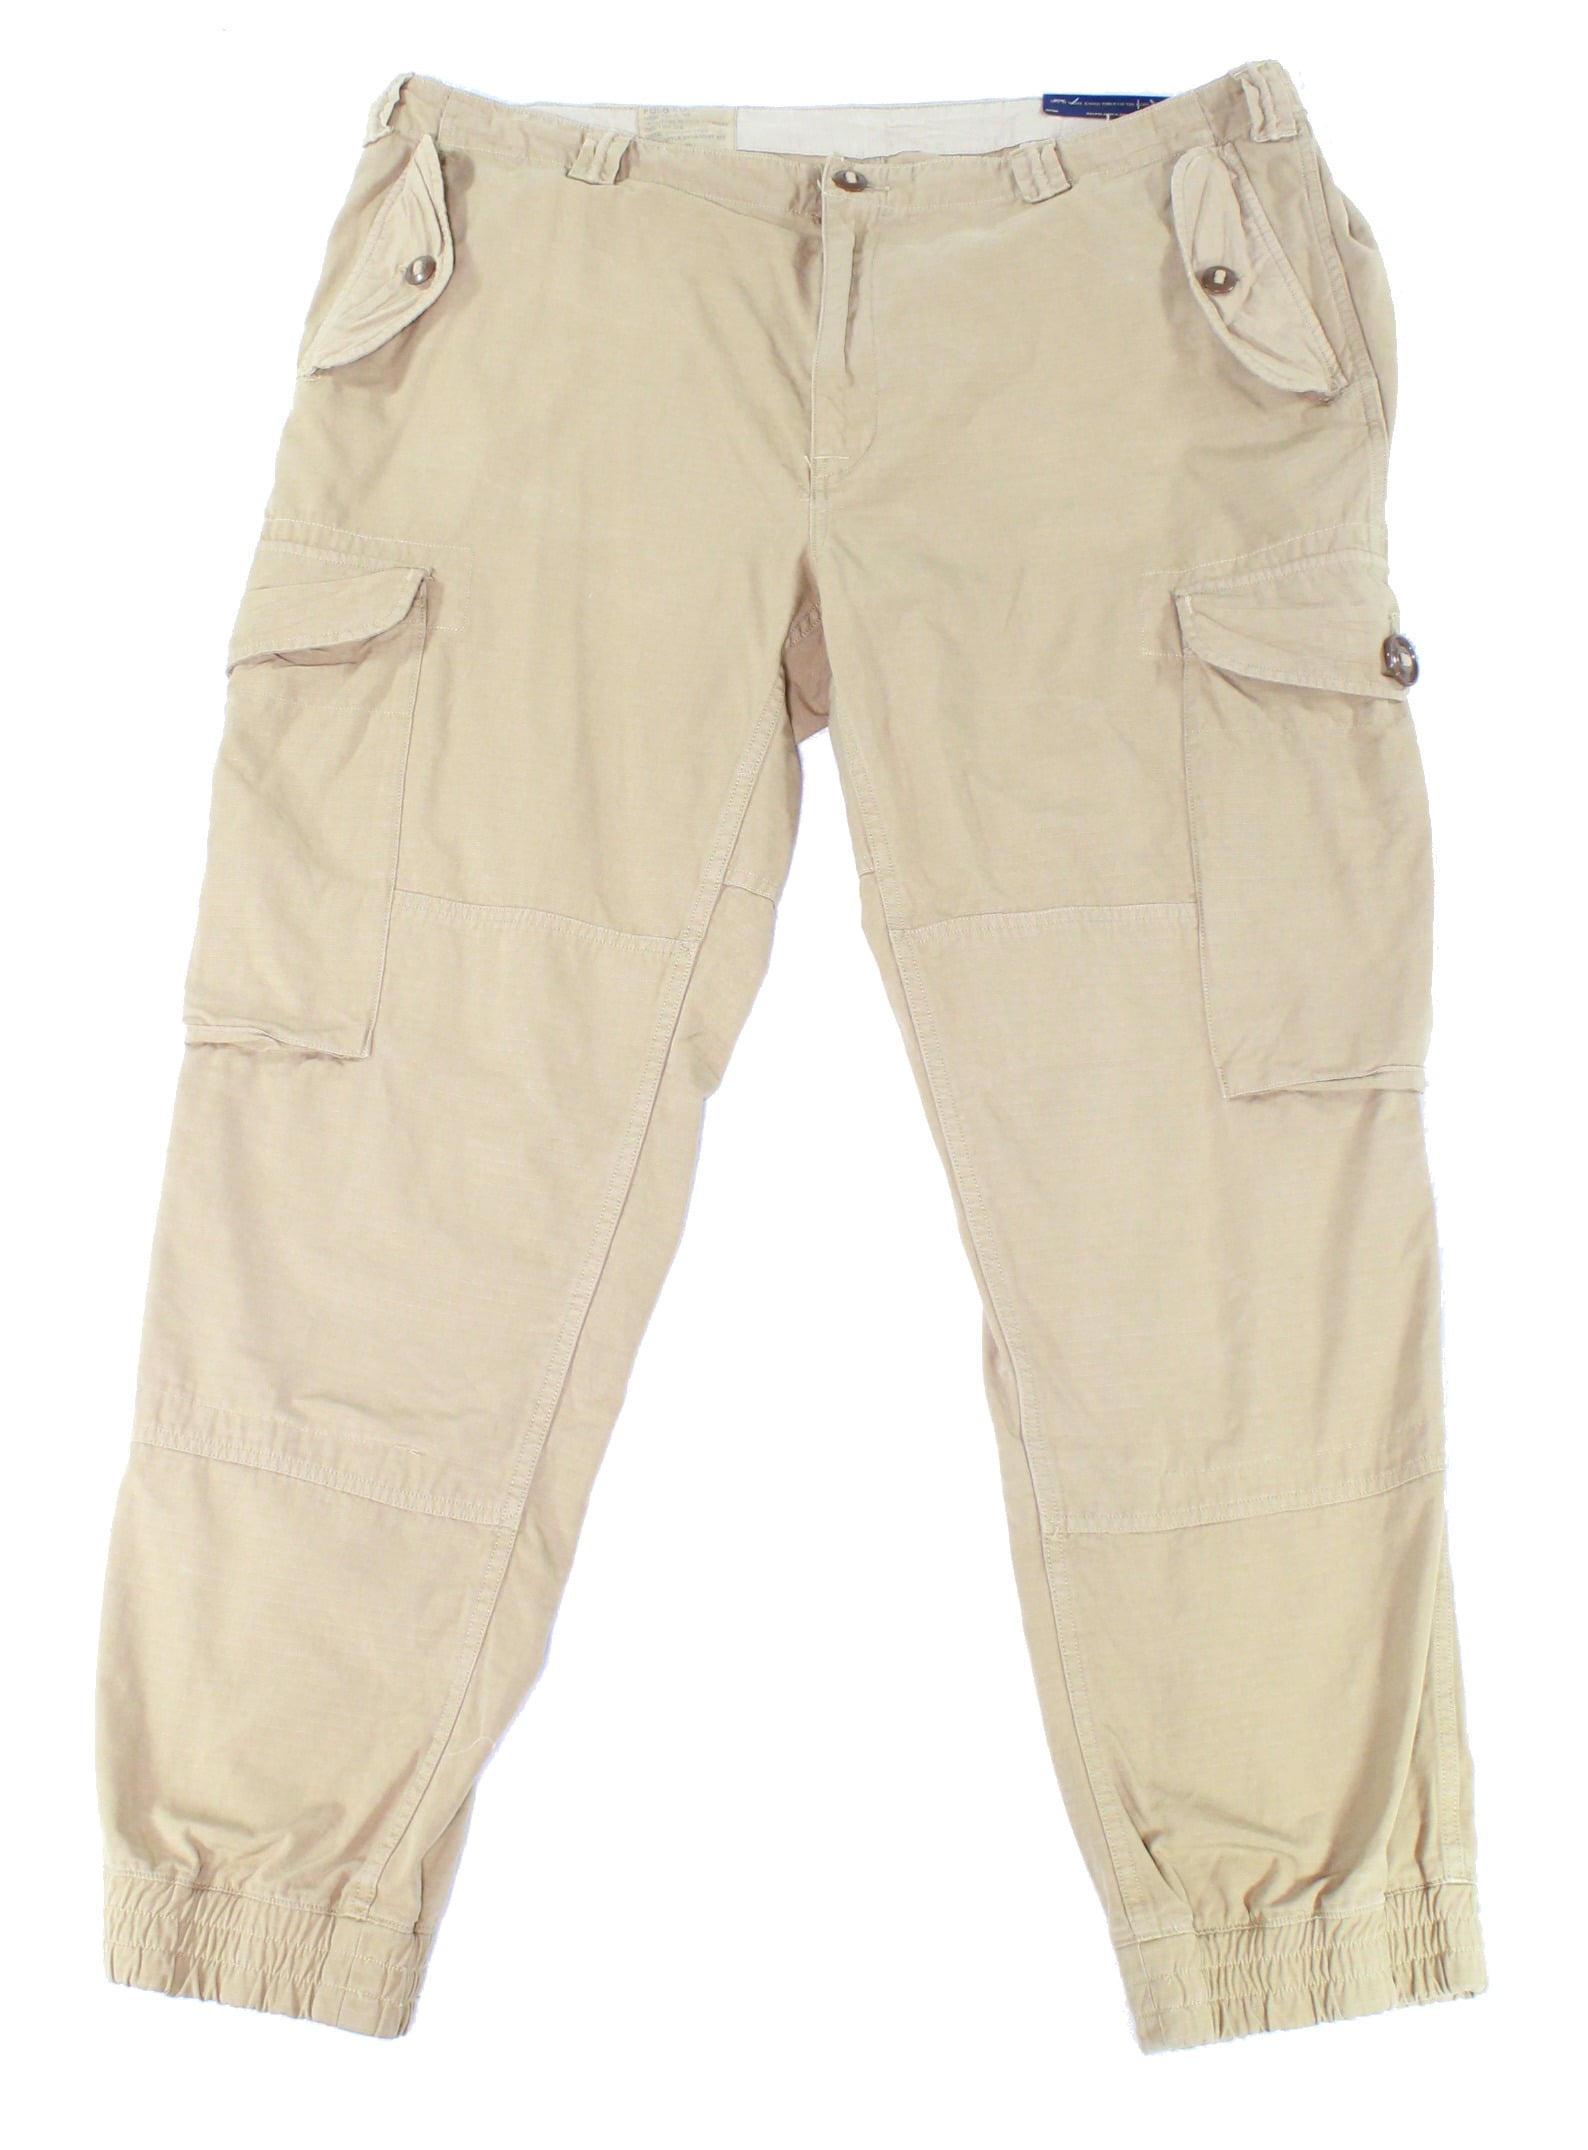 polo cargo pants big and tall